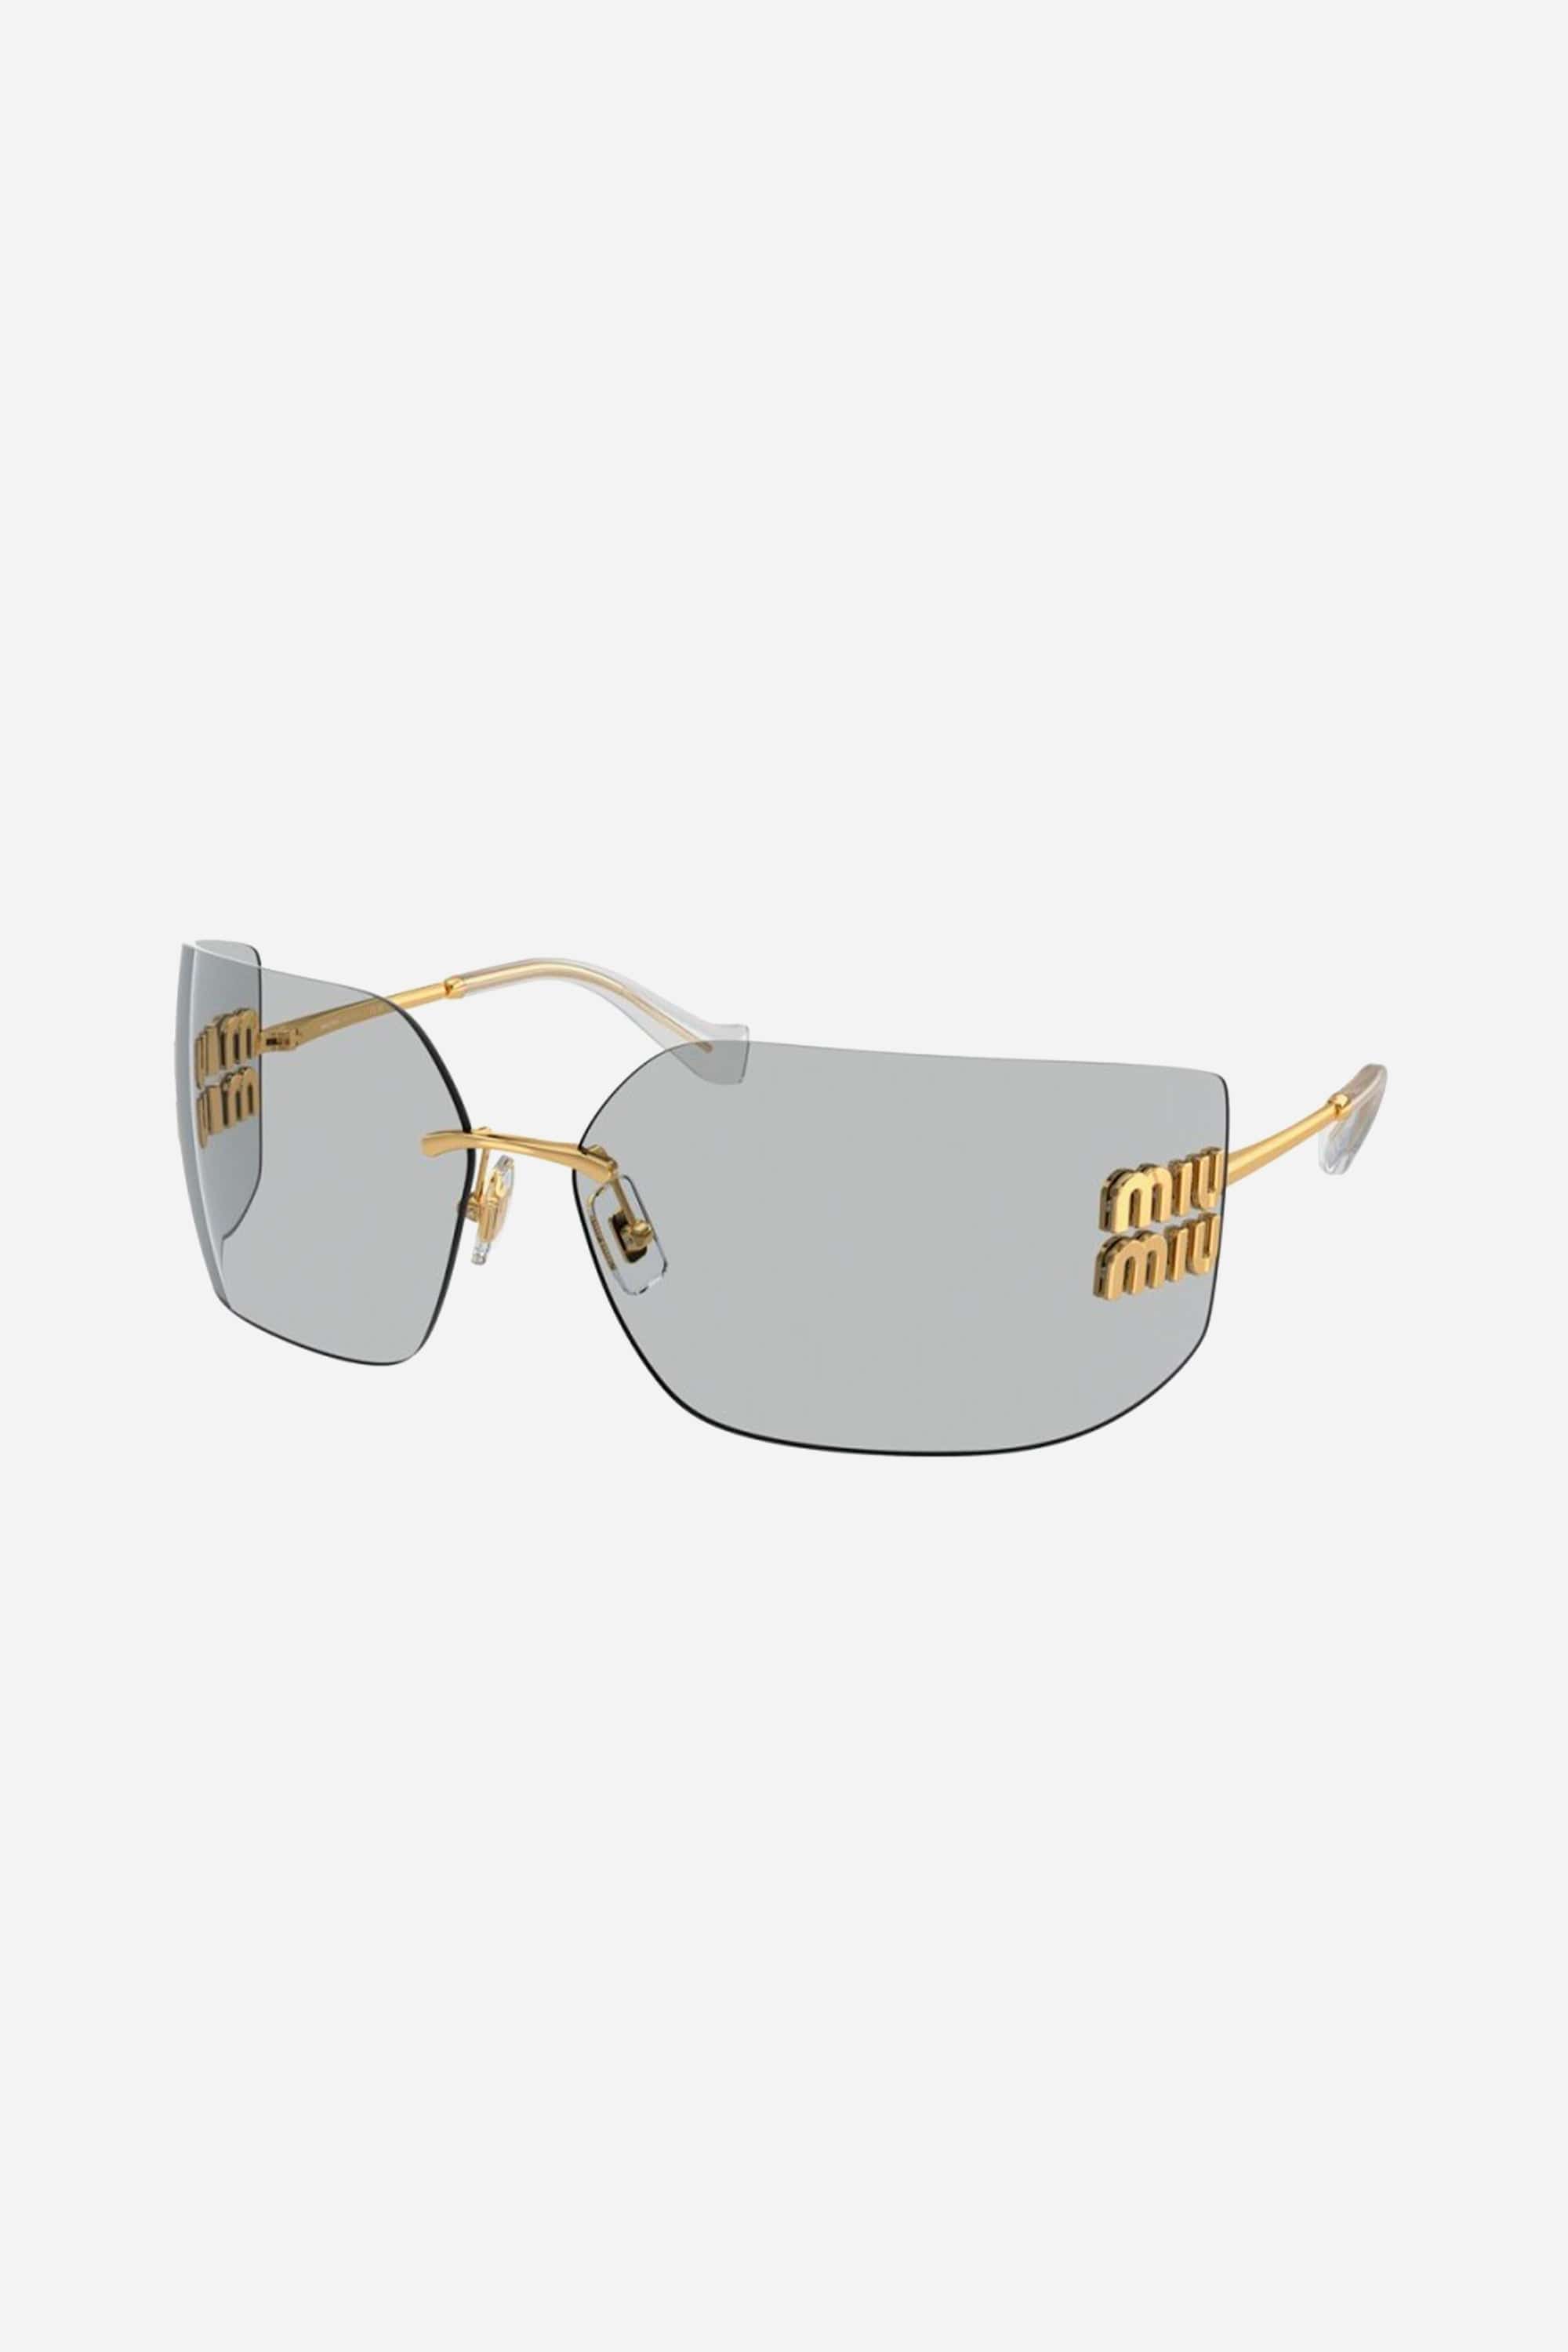 Miu Miu squared metal sunglasses with blue mirror and gold details - Eyewear Club